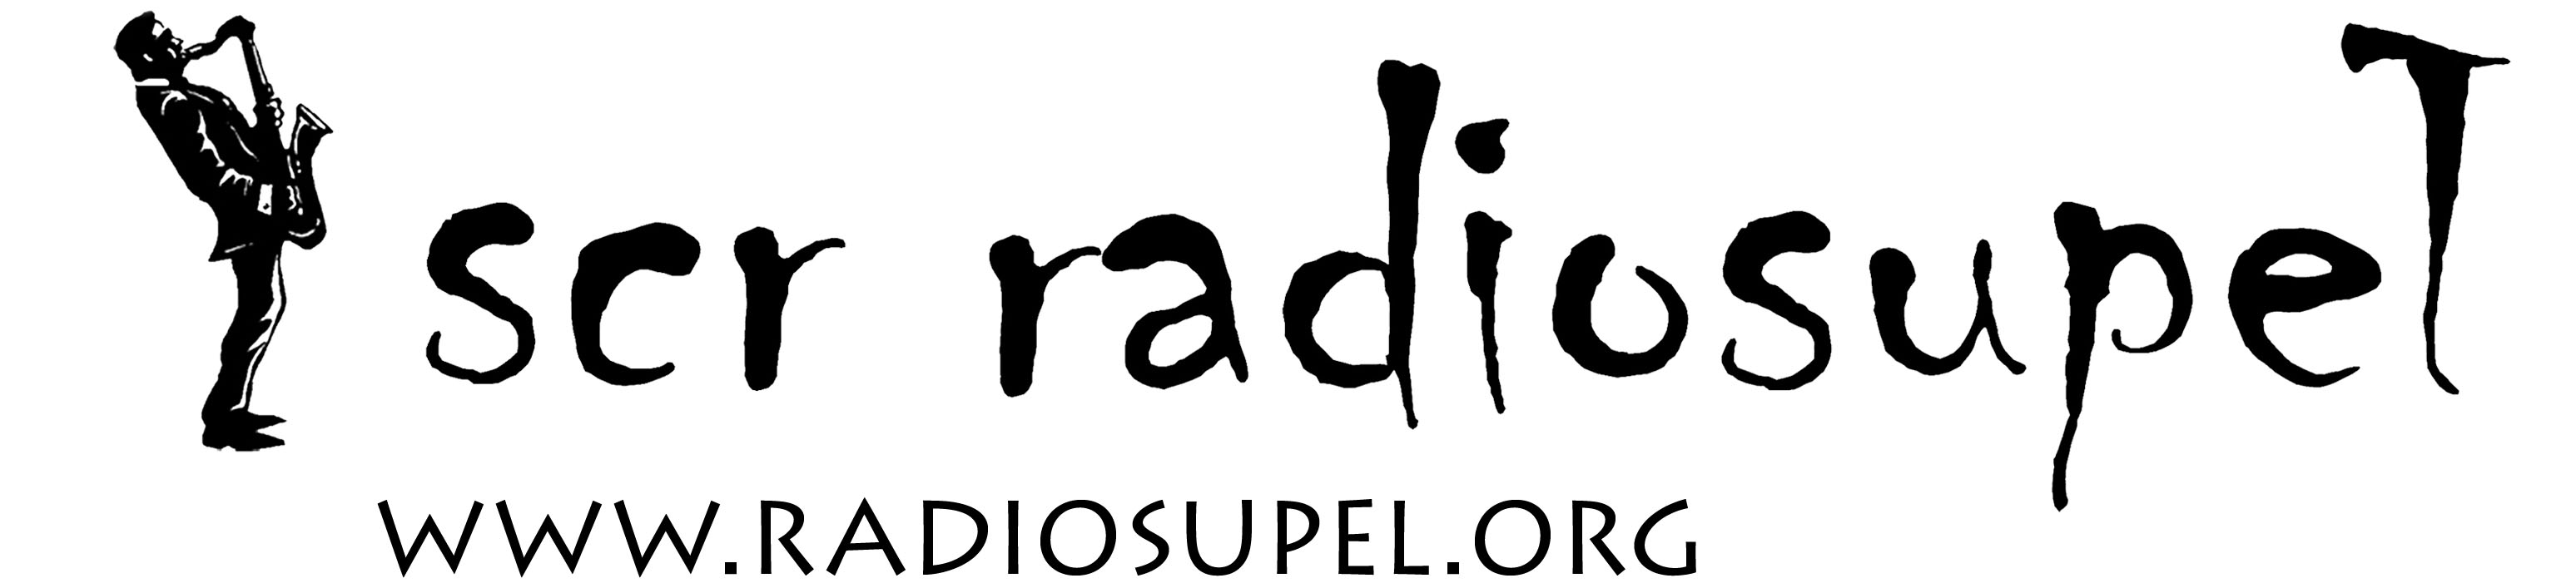 Logotyp Studenckiego Centrum Radiowego Radiosupeł.